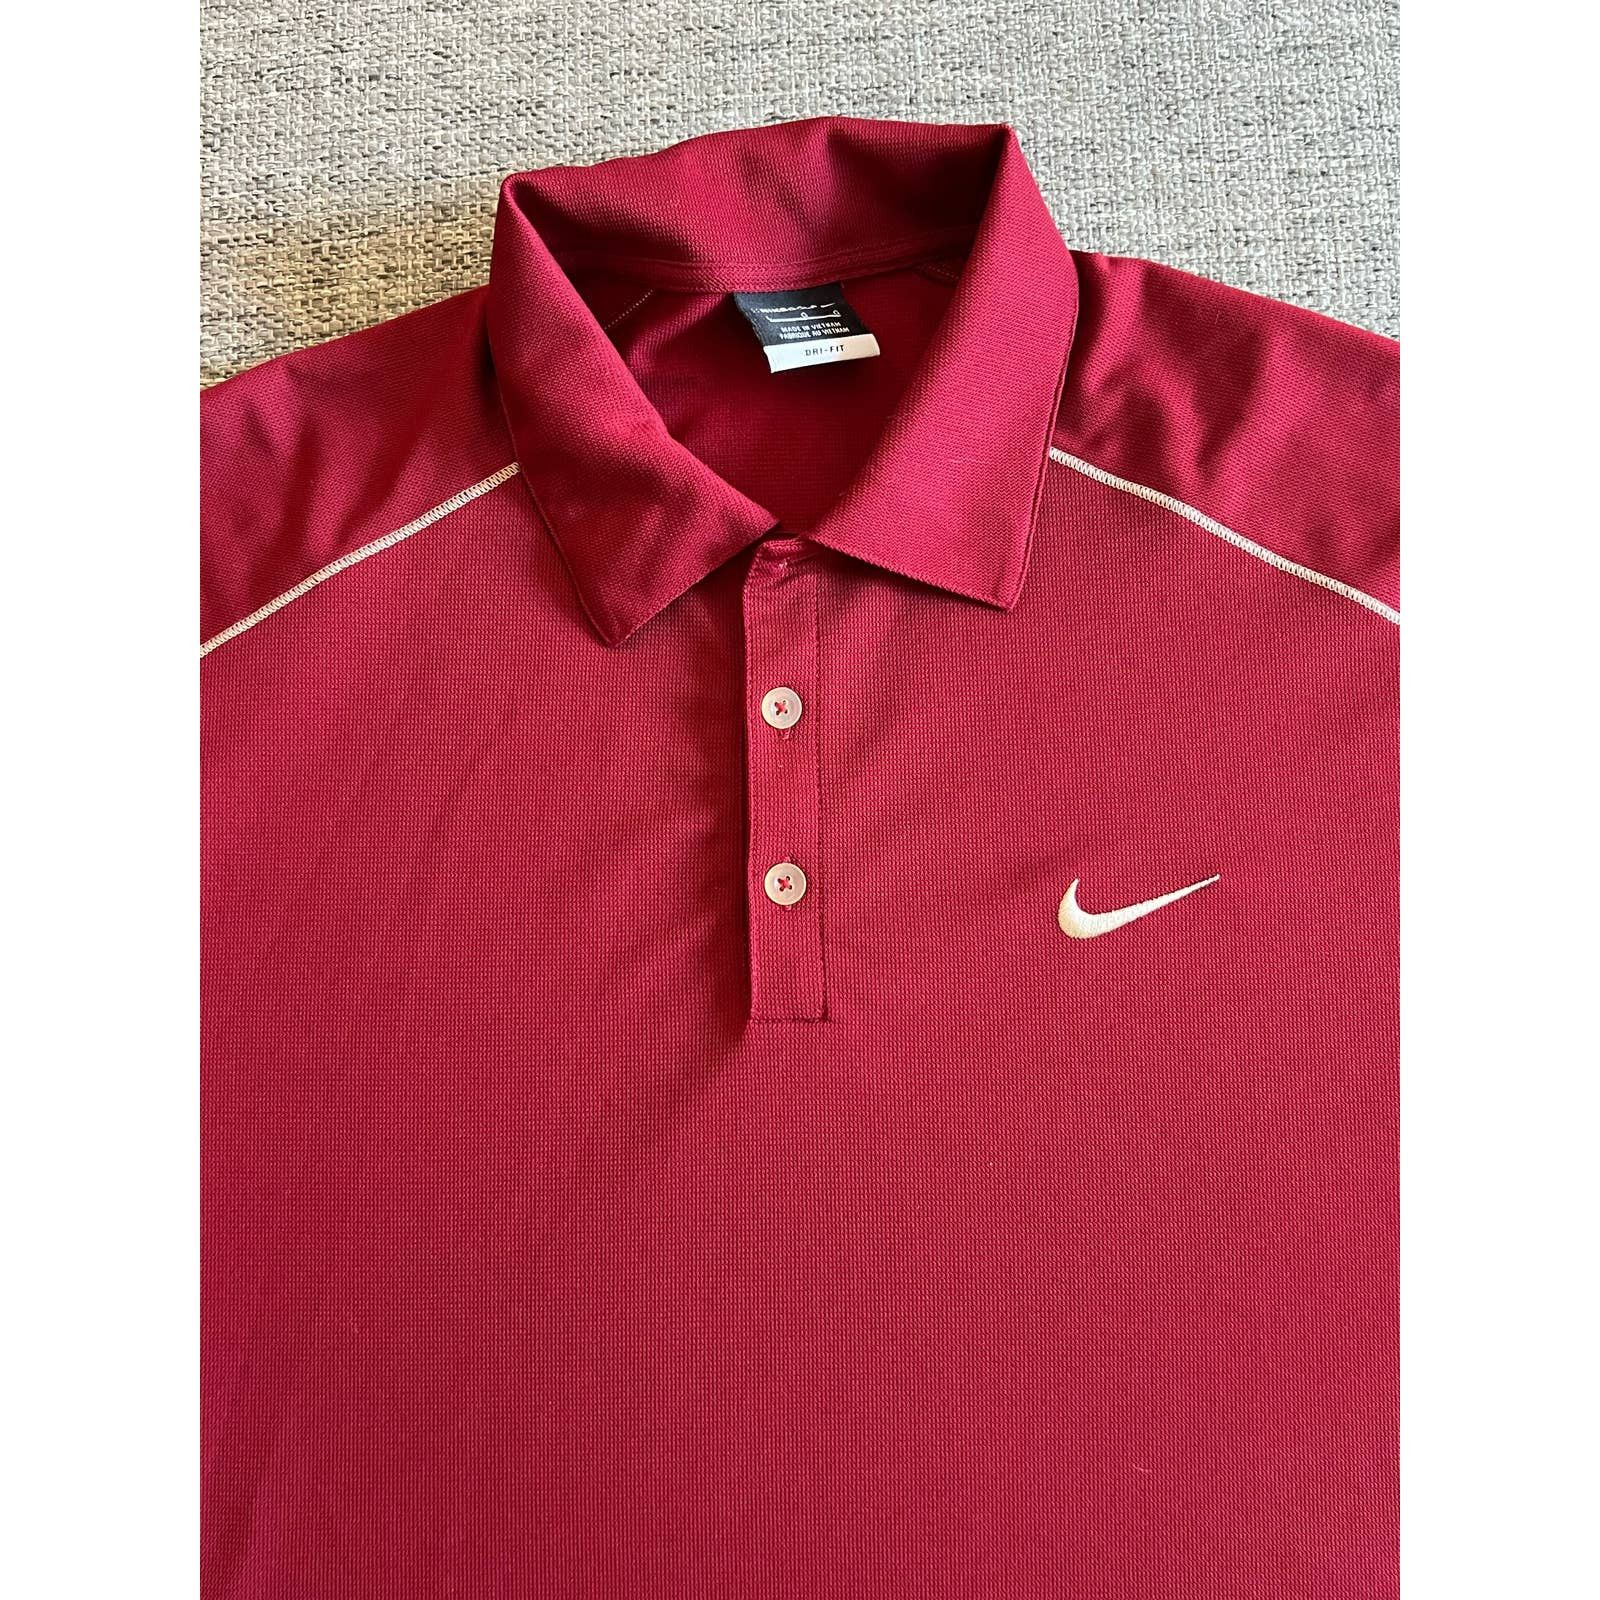 Nike Nike Golf Large maroon polo no logo Size US L / EU 52-54 / 3 - 6 Thumbnail